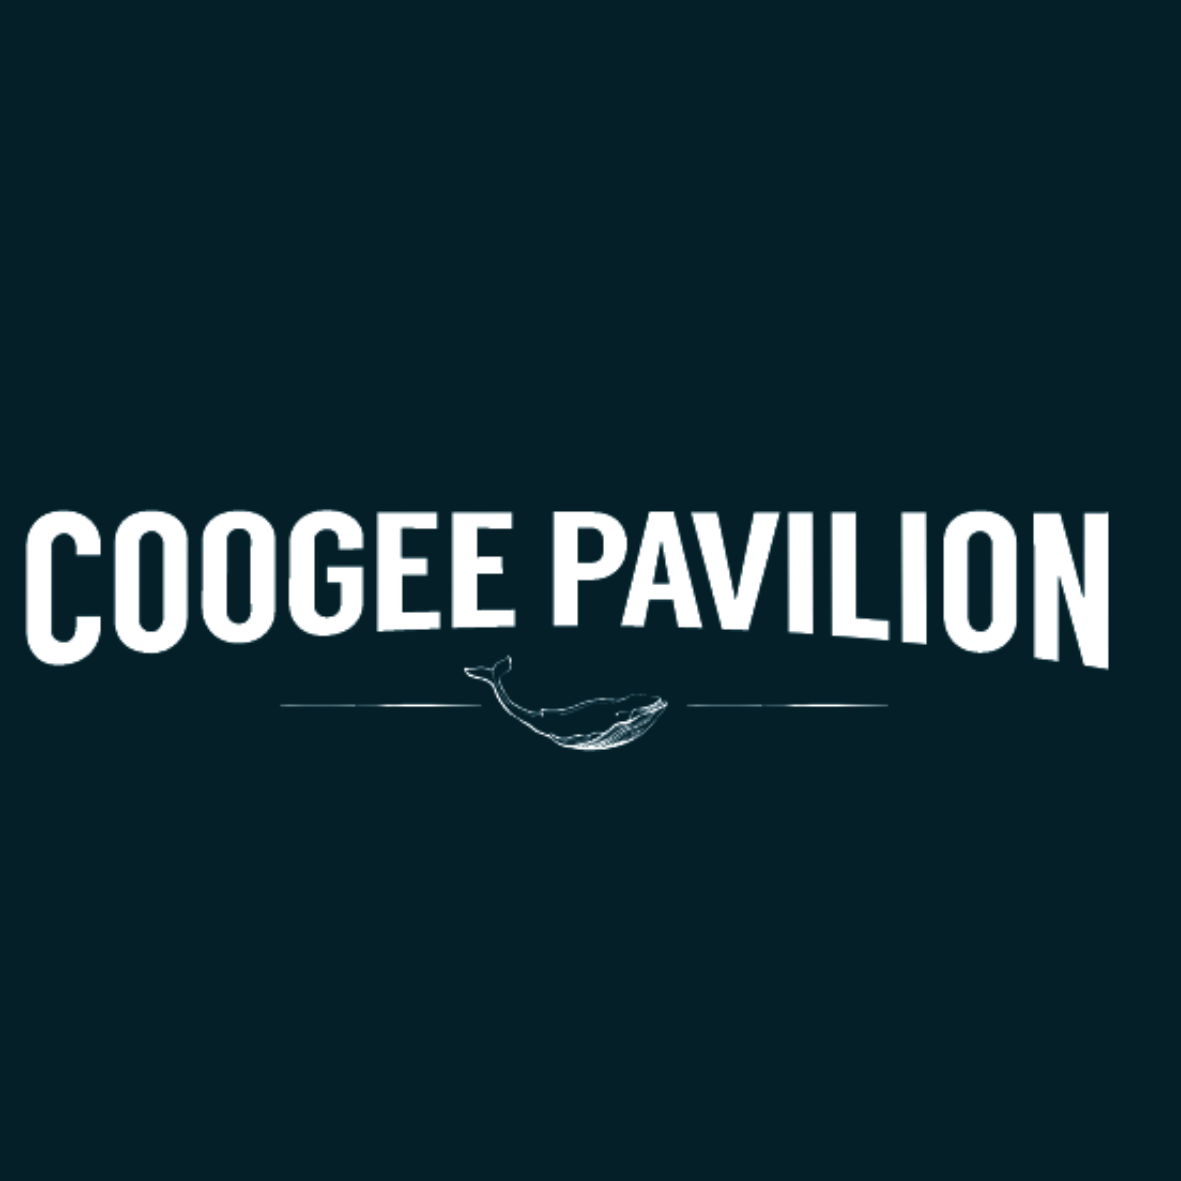 Coogee Pavilion logo